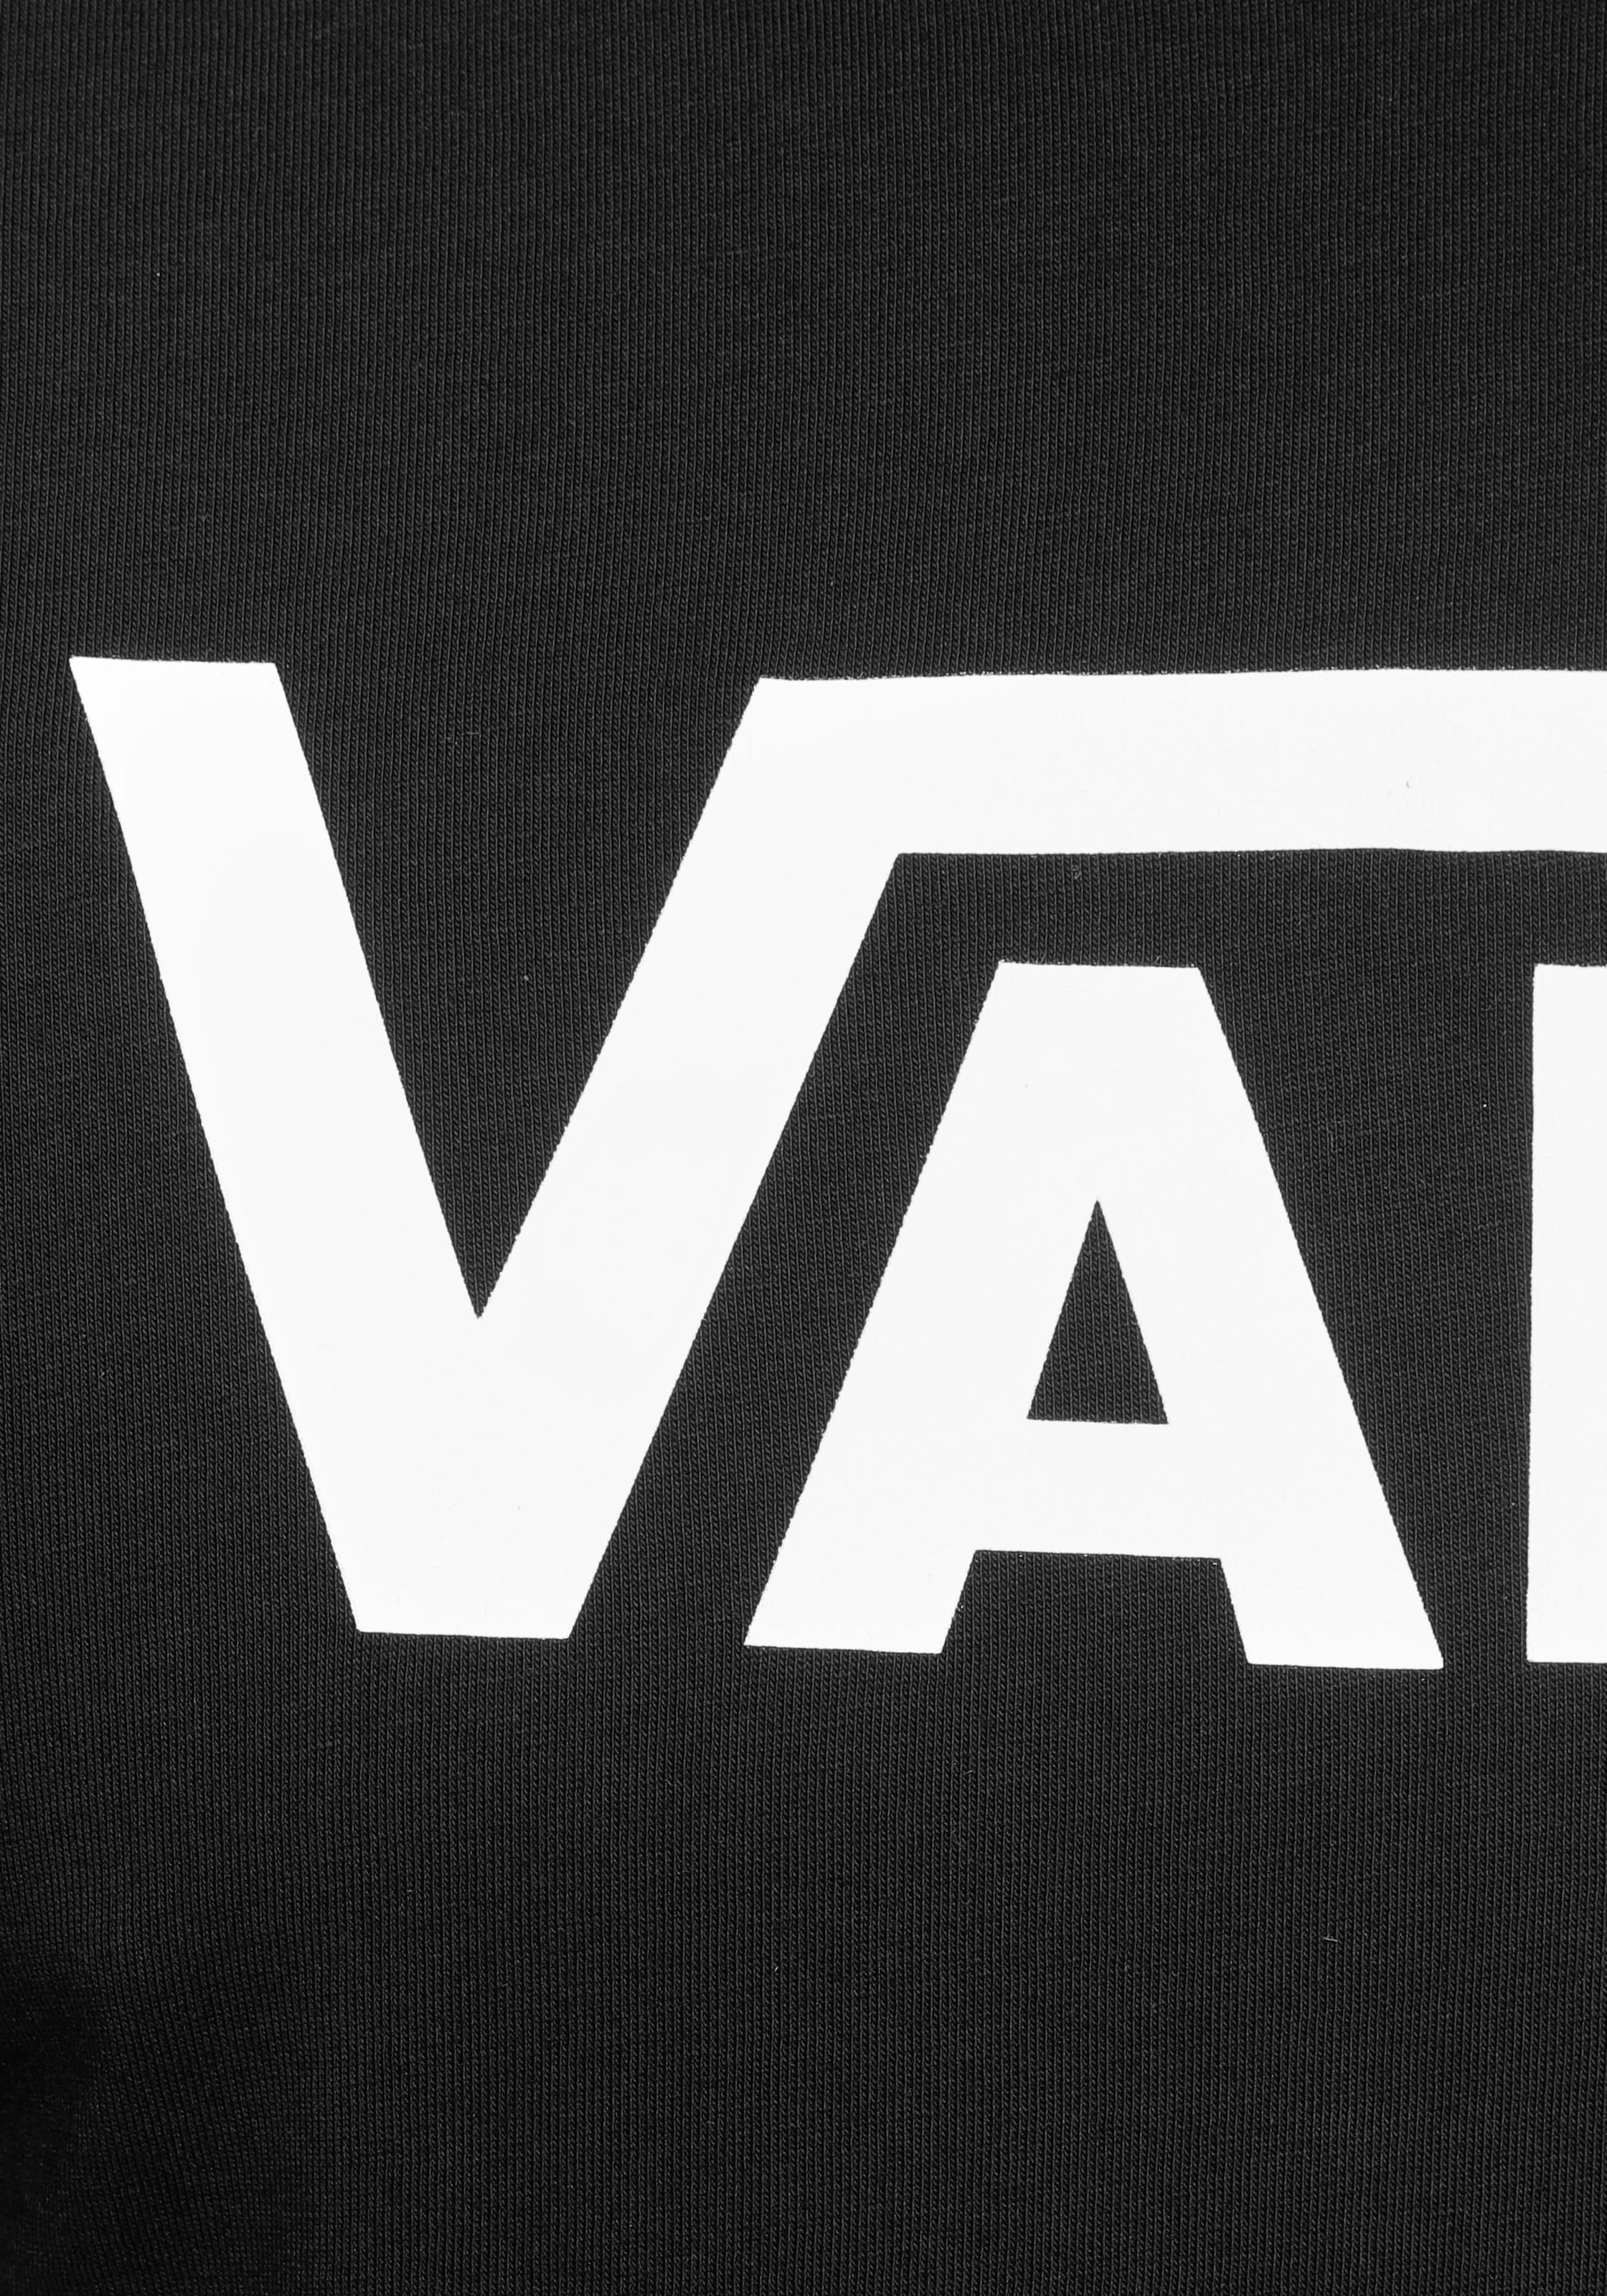 Vans T-Shirt »MN VANS CLASSIC«, mit grossem Logoprint